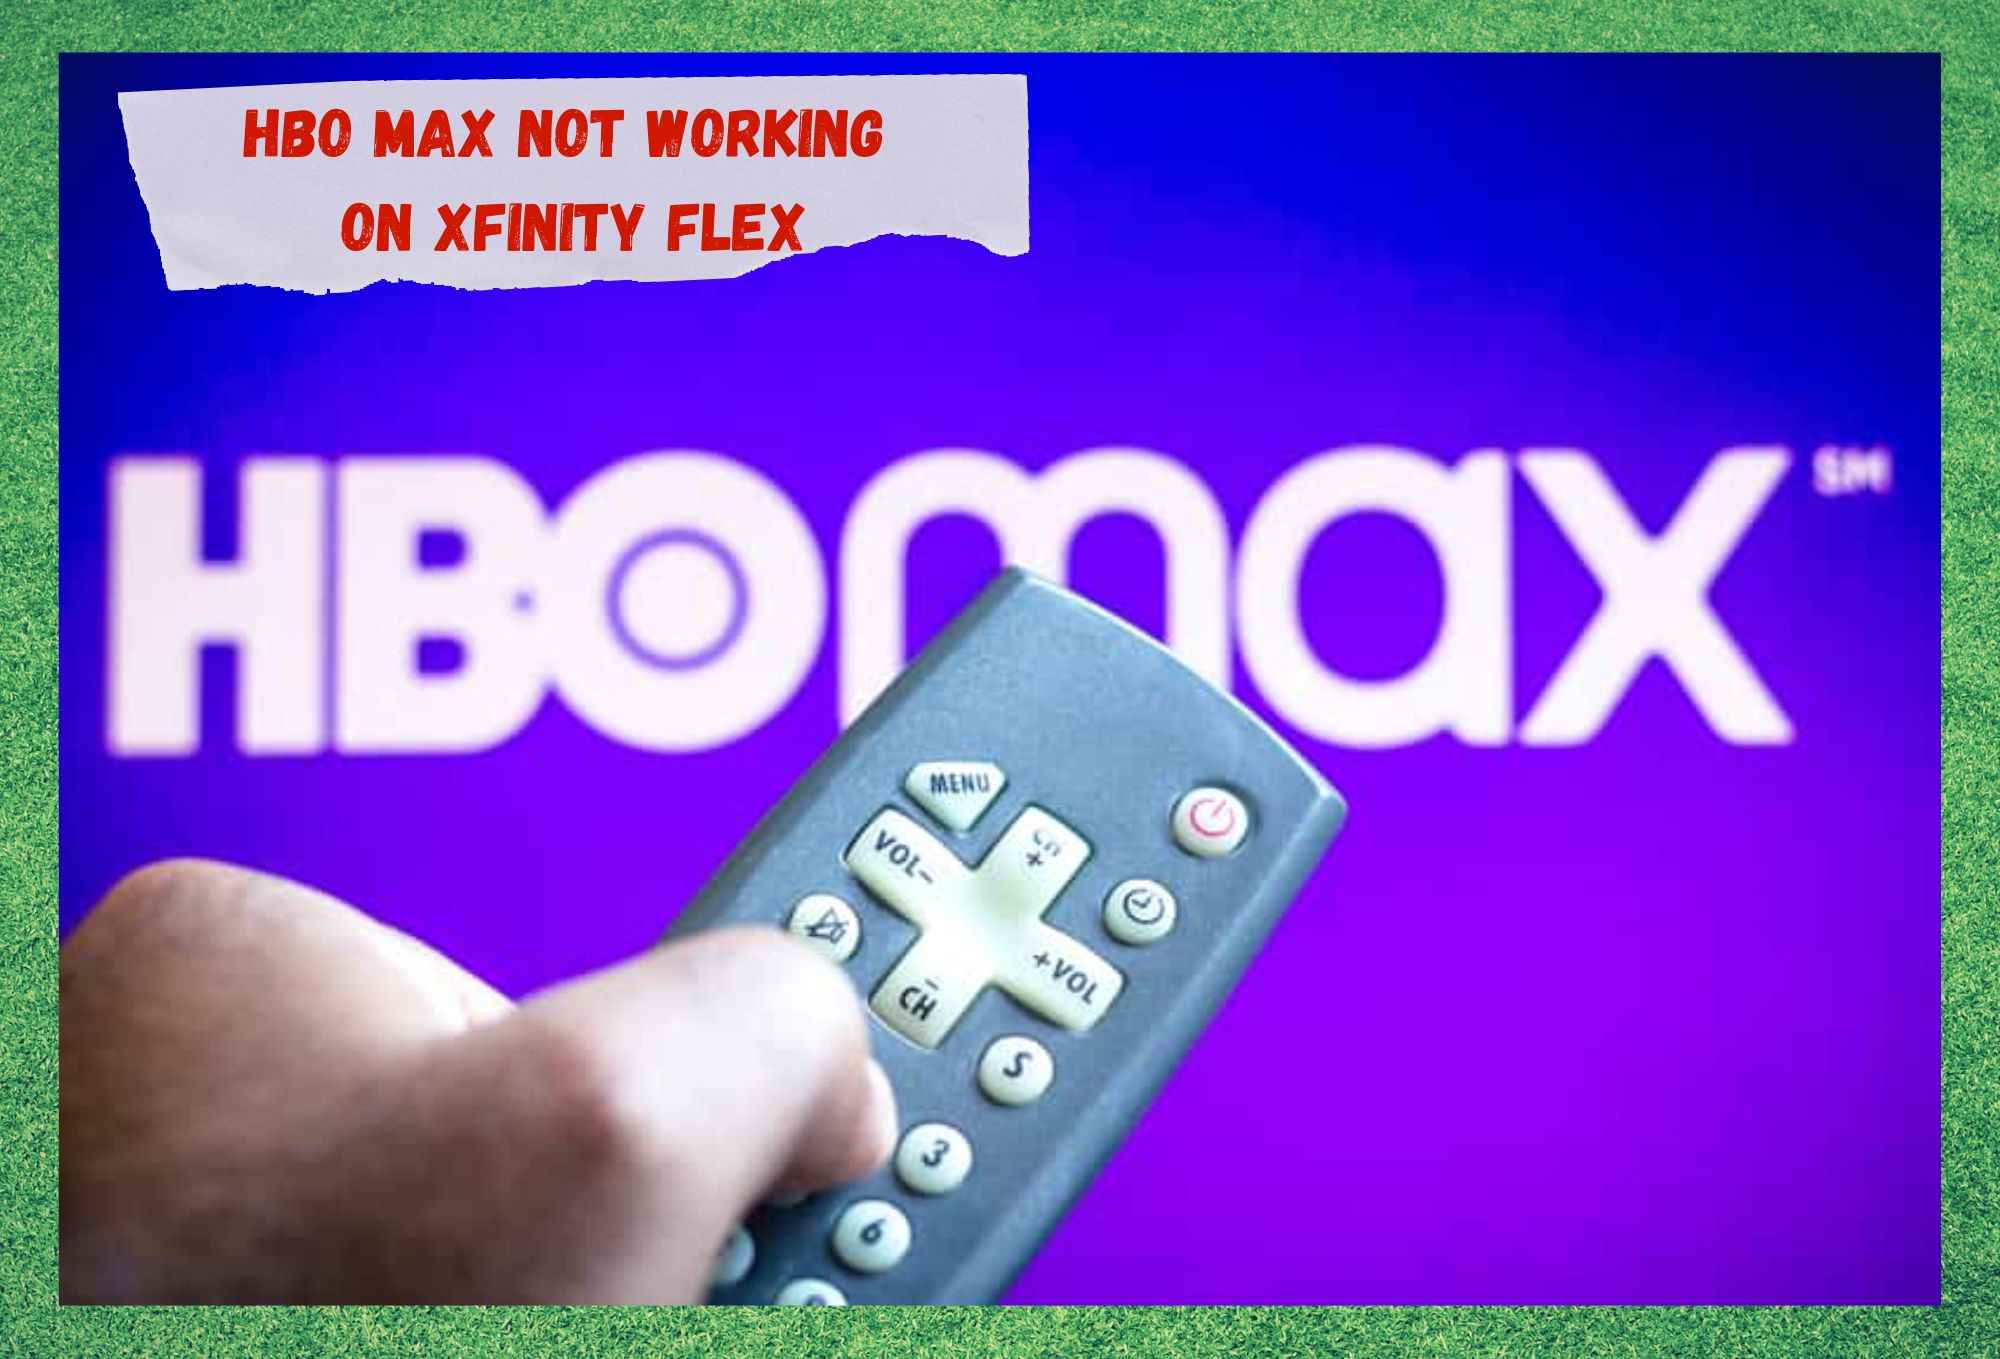 HBO max not working on Xfinity flex